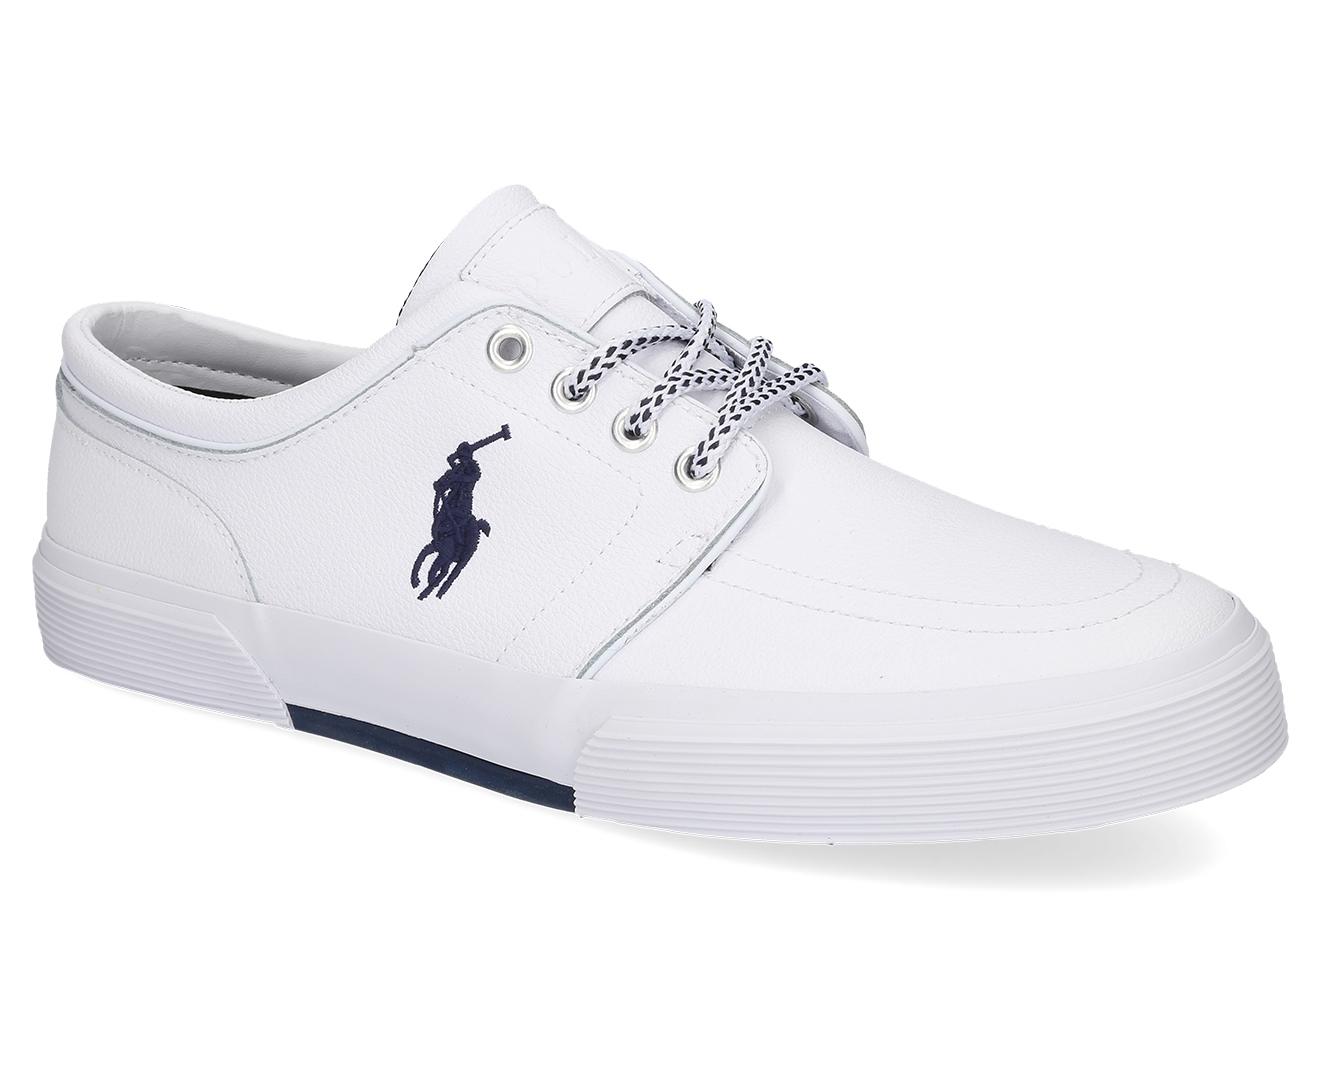 Polo Ralph Lauren Men s Faxon Low Sneakers White Sports Leather